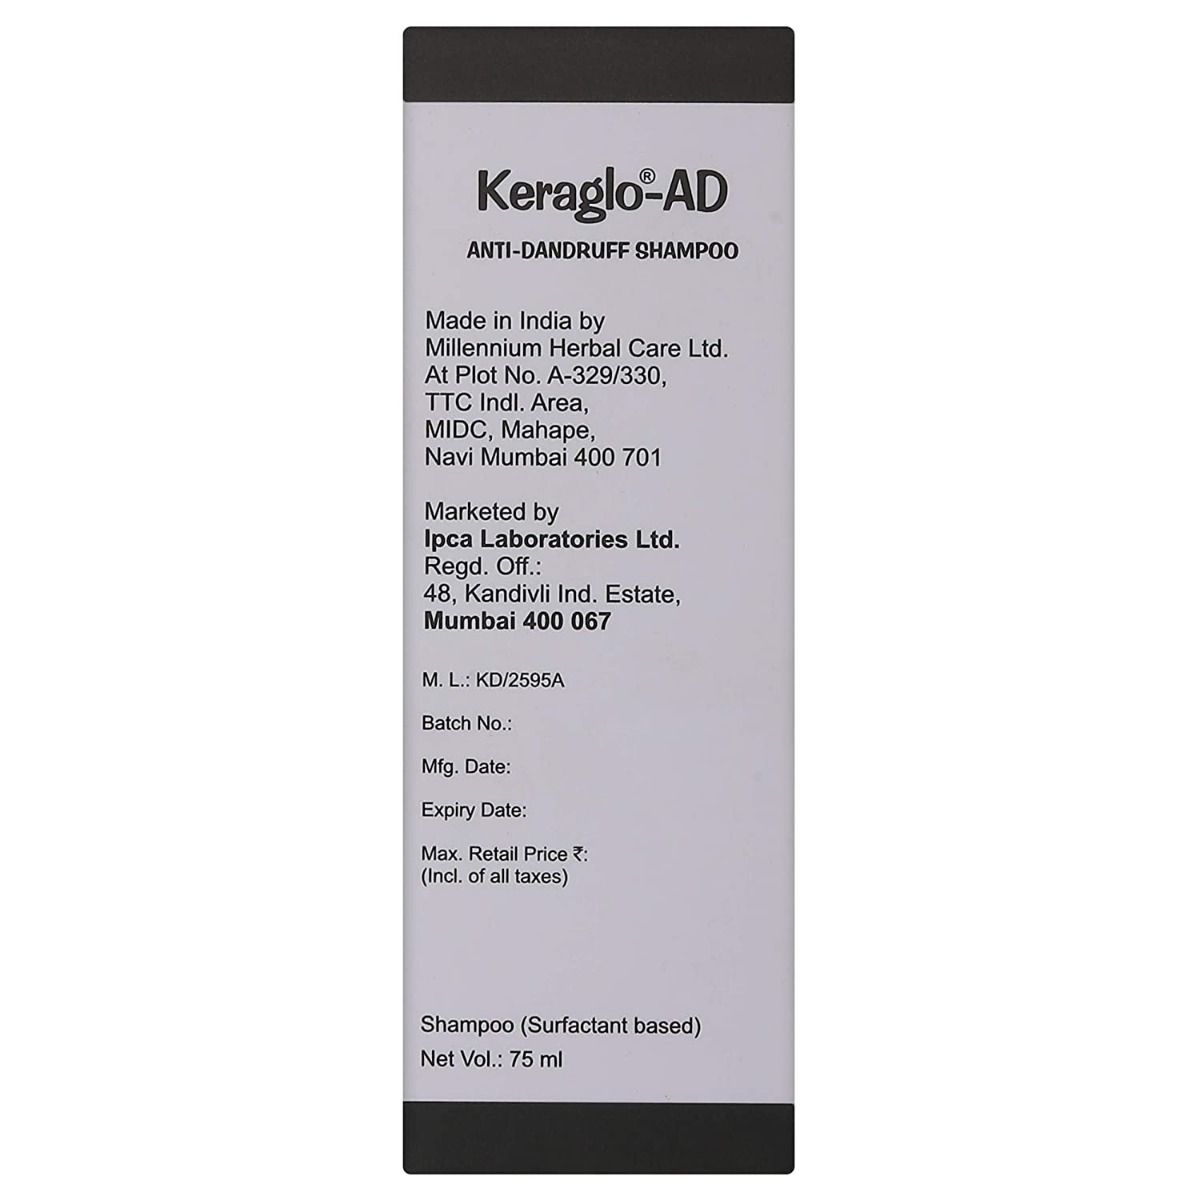 Keraglo-AD Anti-Dandruff Shampoo, 75 ml, Pack of 1 